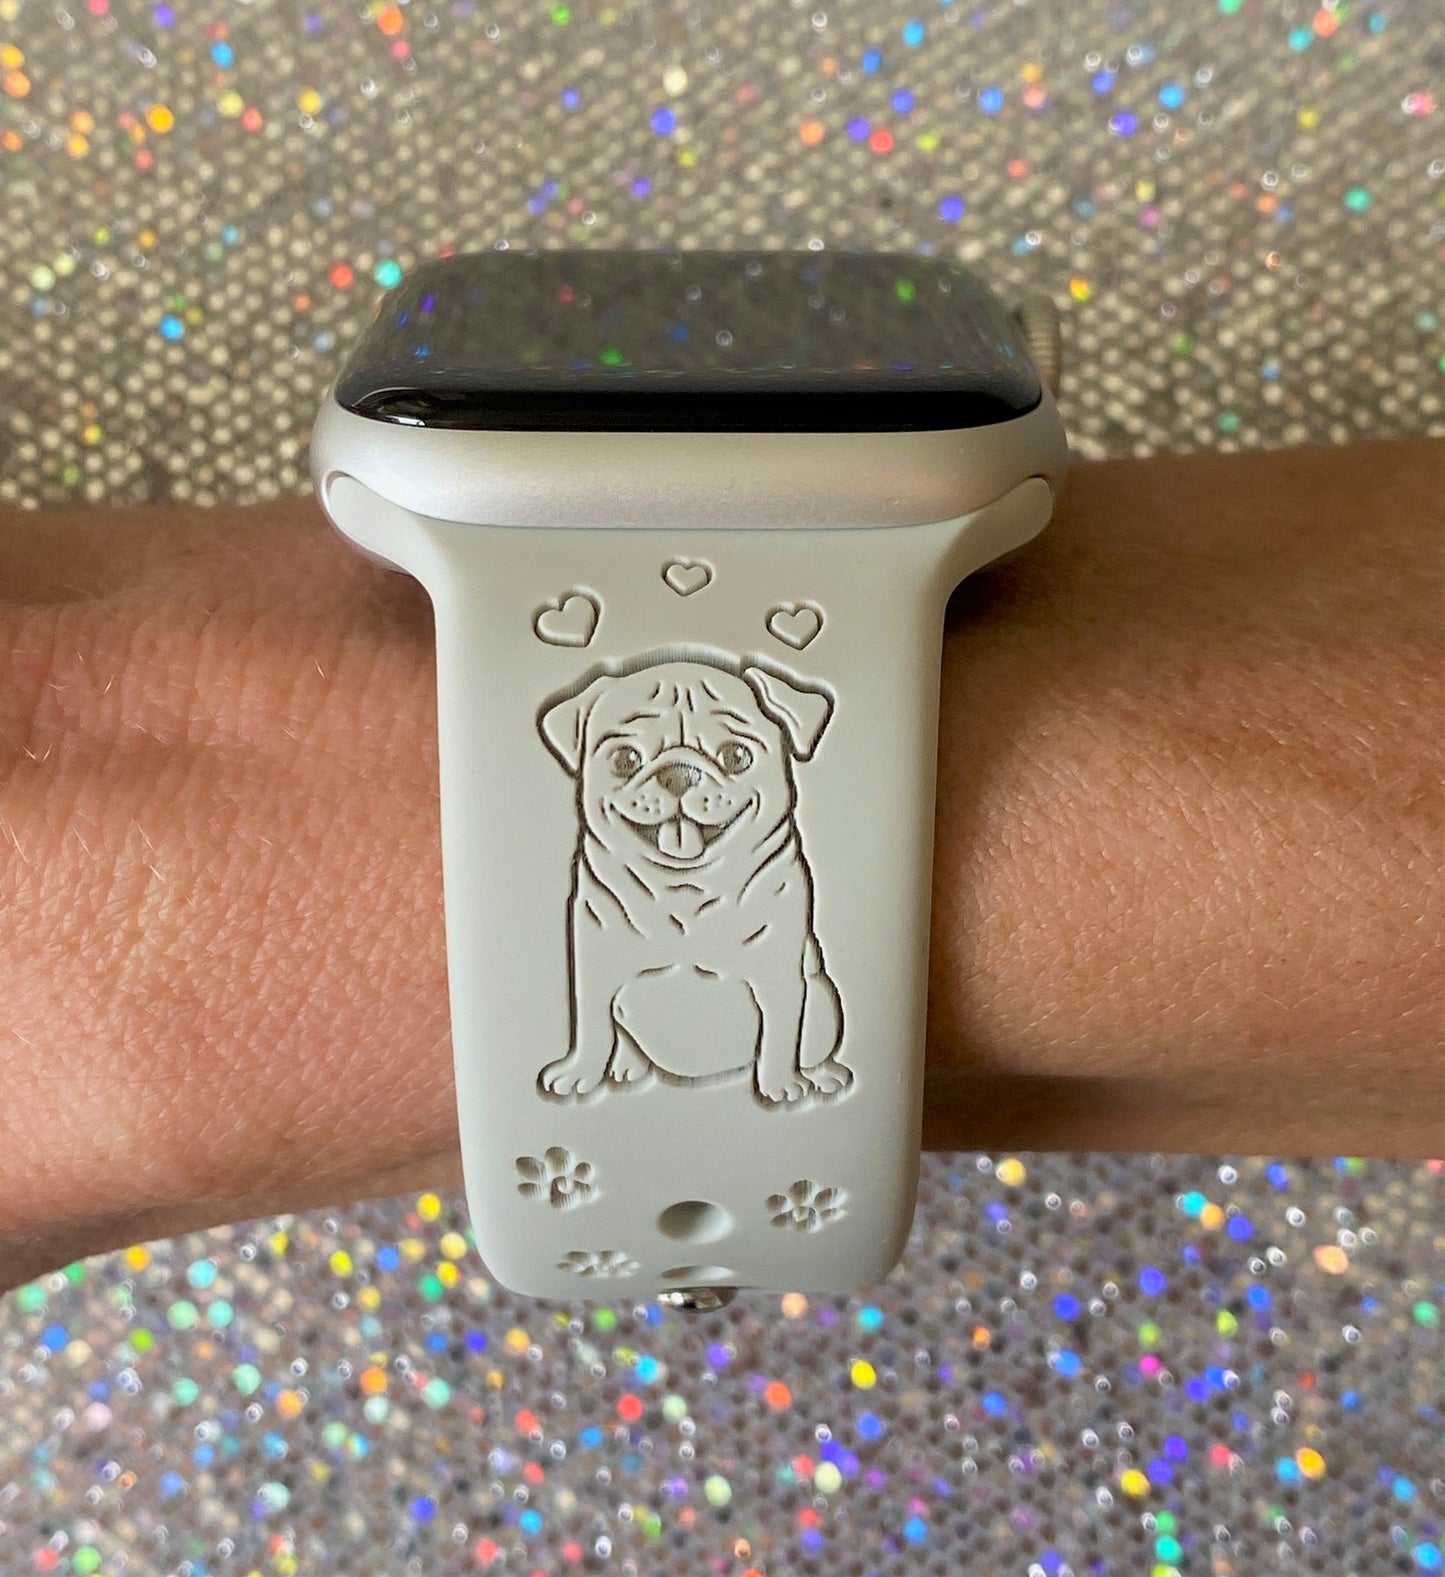 Pug Dog Apple Watch Band